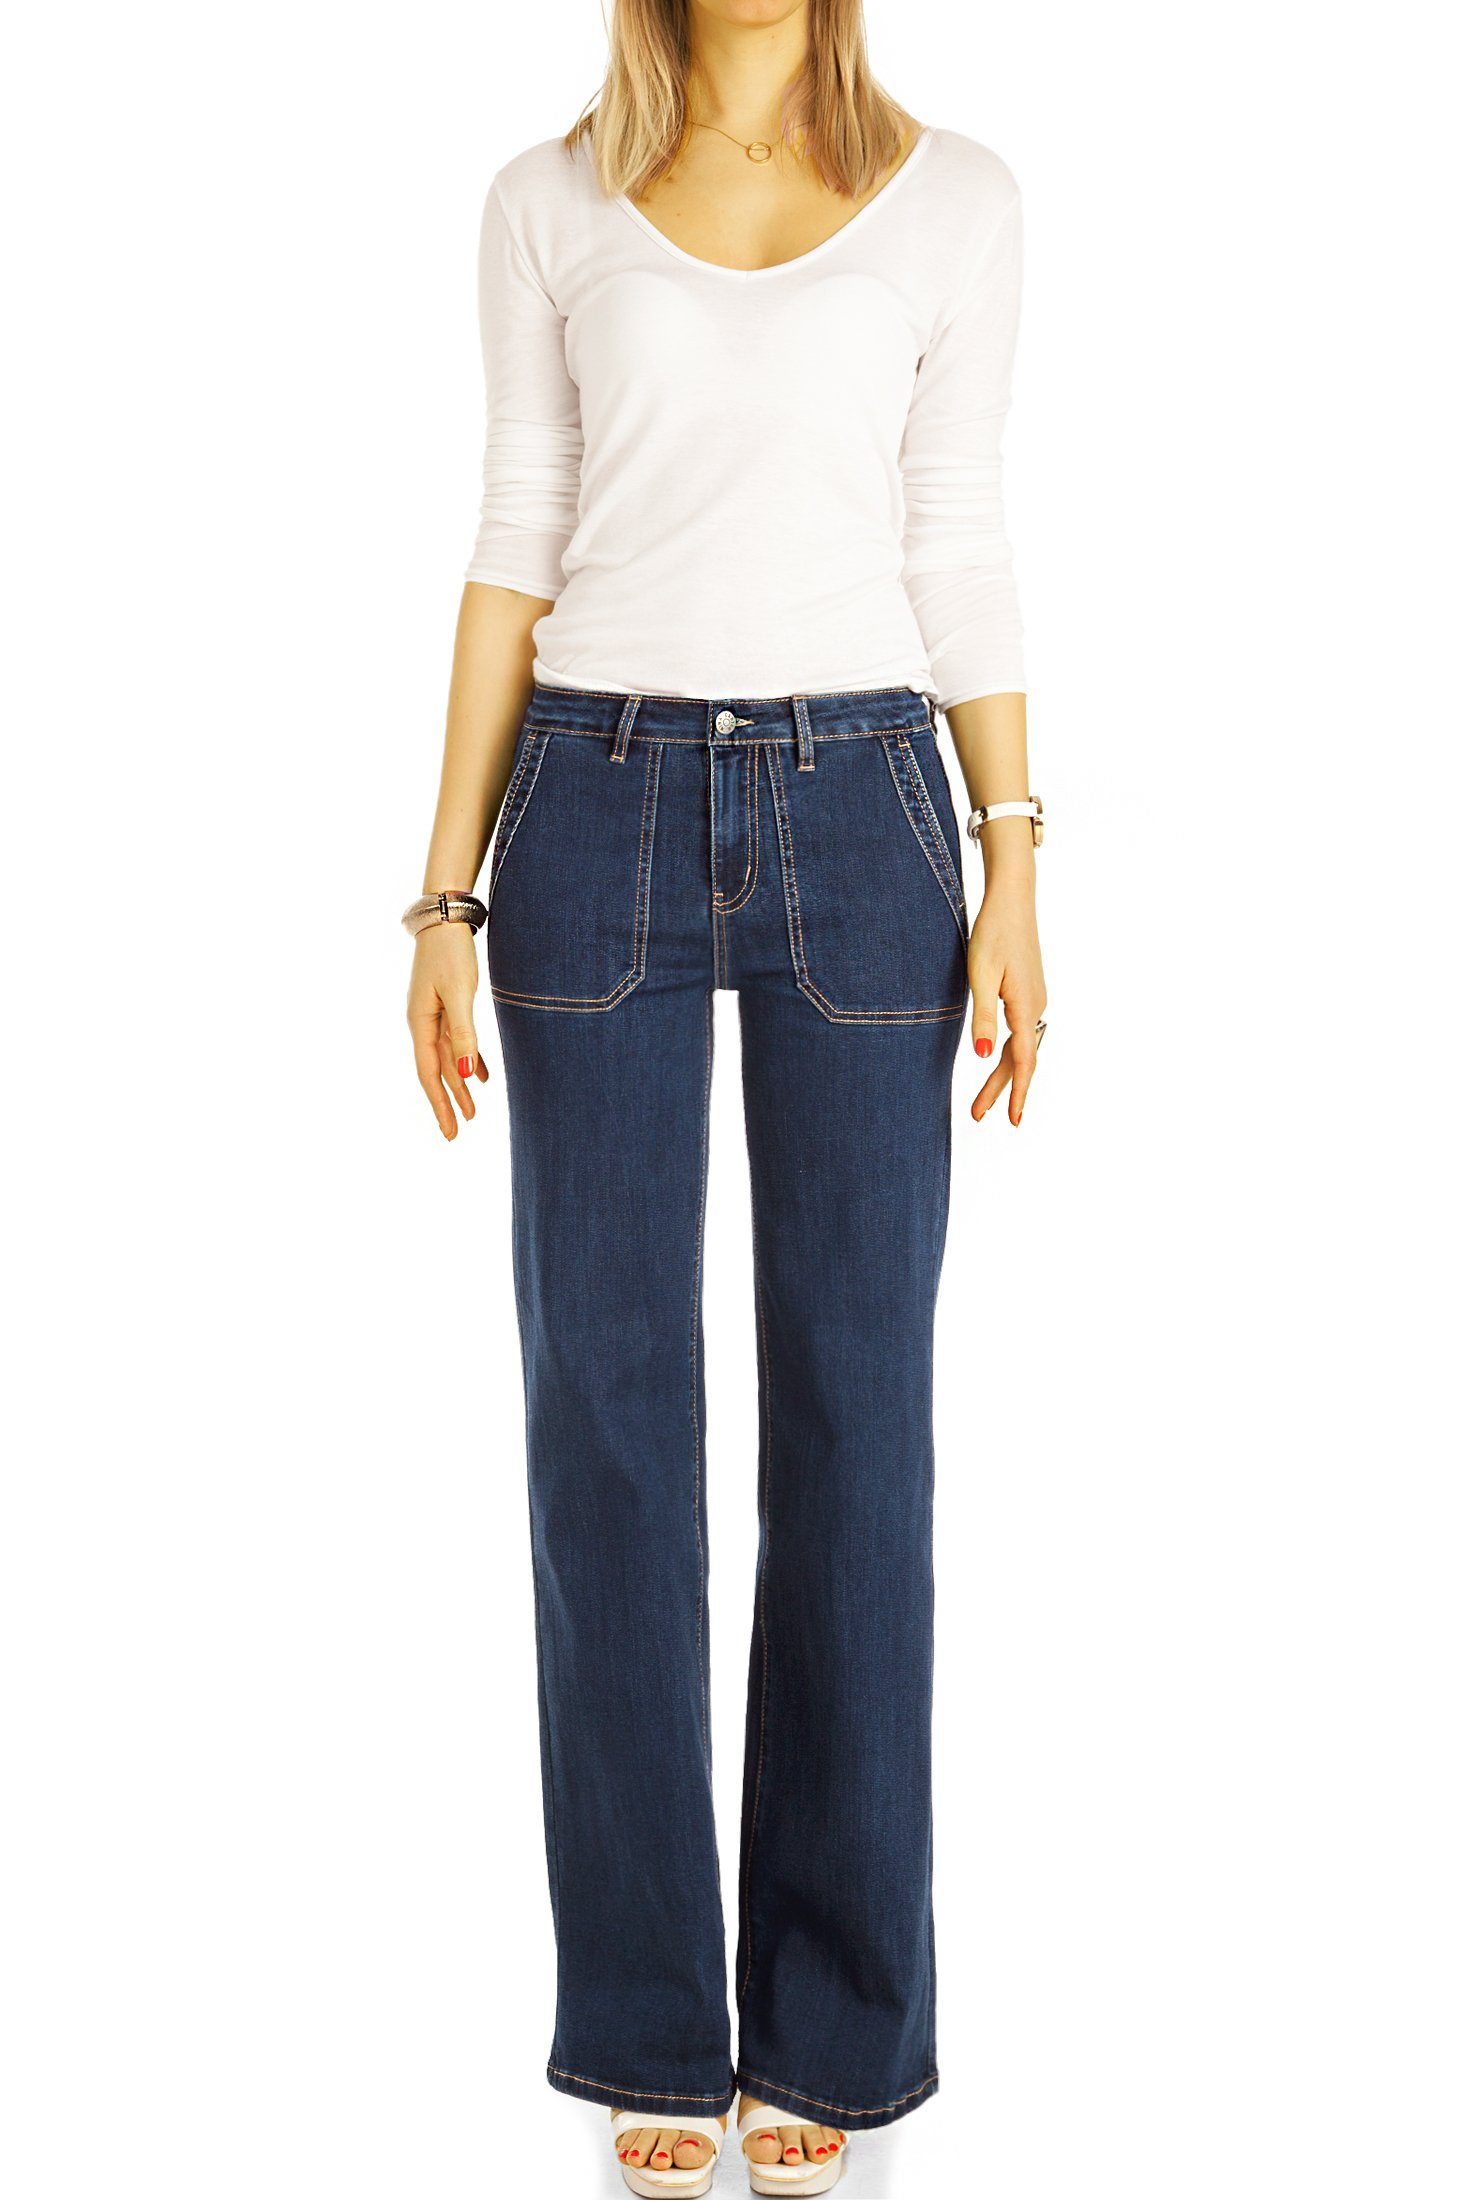 Damen 5-Pocket-Style Bootcut Bootcut-Jeans Jeans, straight Hosen - - mit j31k Stretch-Anteil, styled waist Passform hellblau be medium